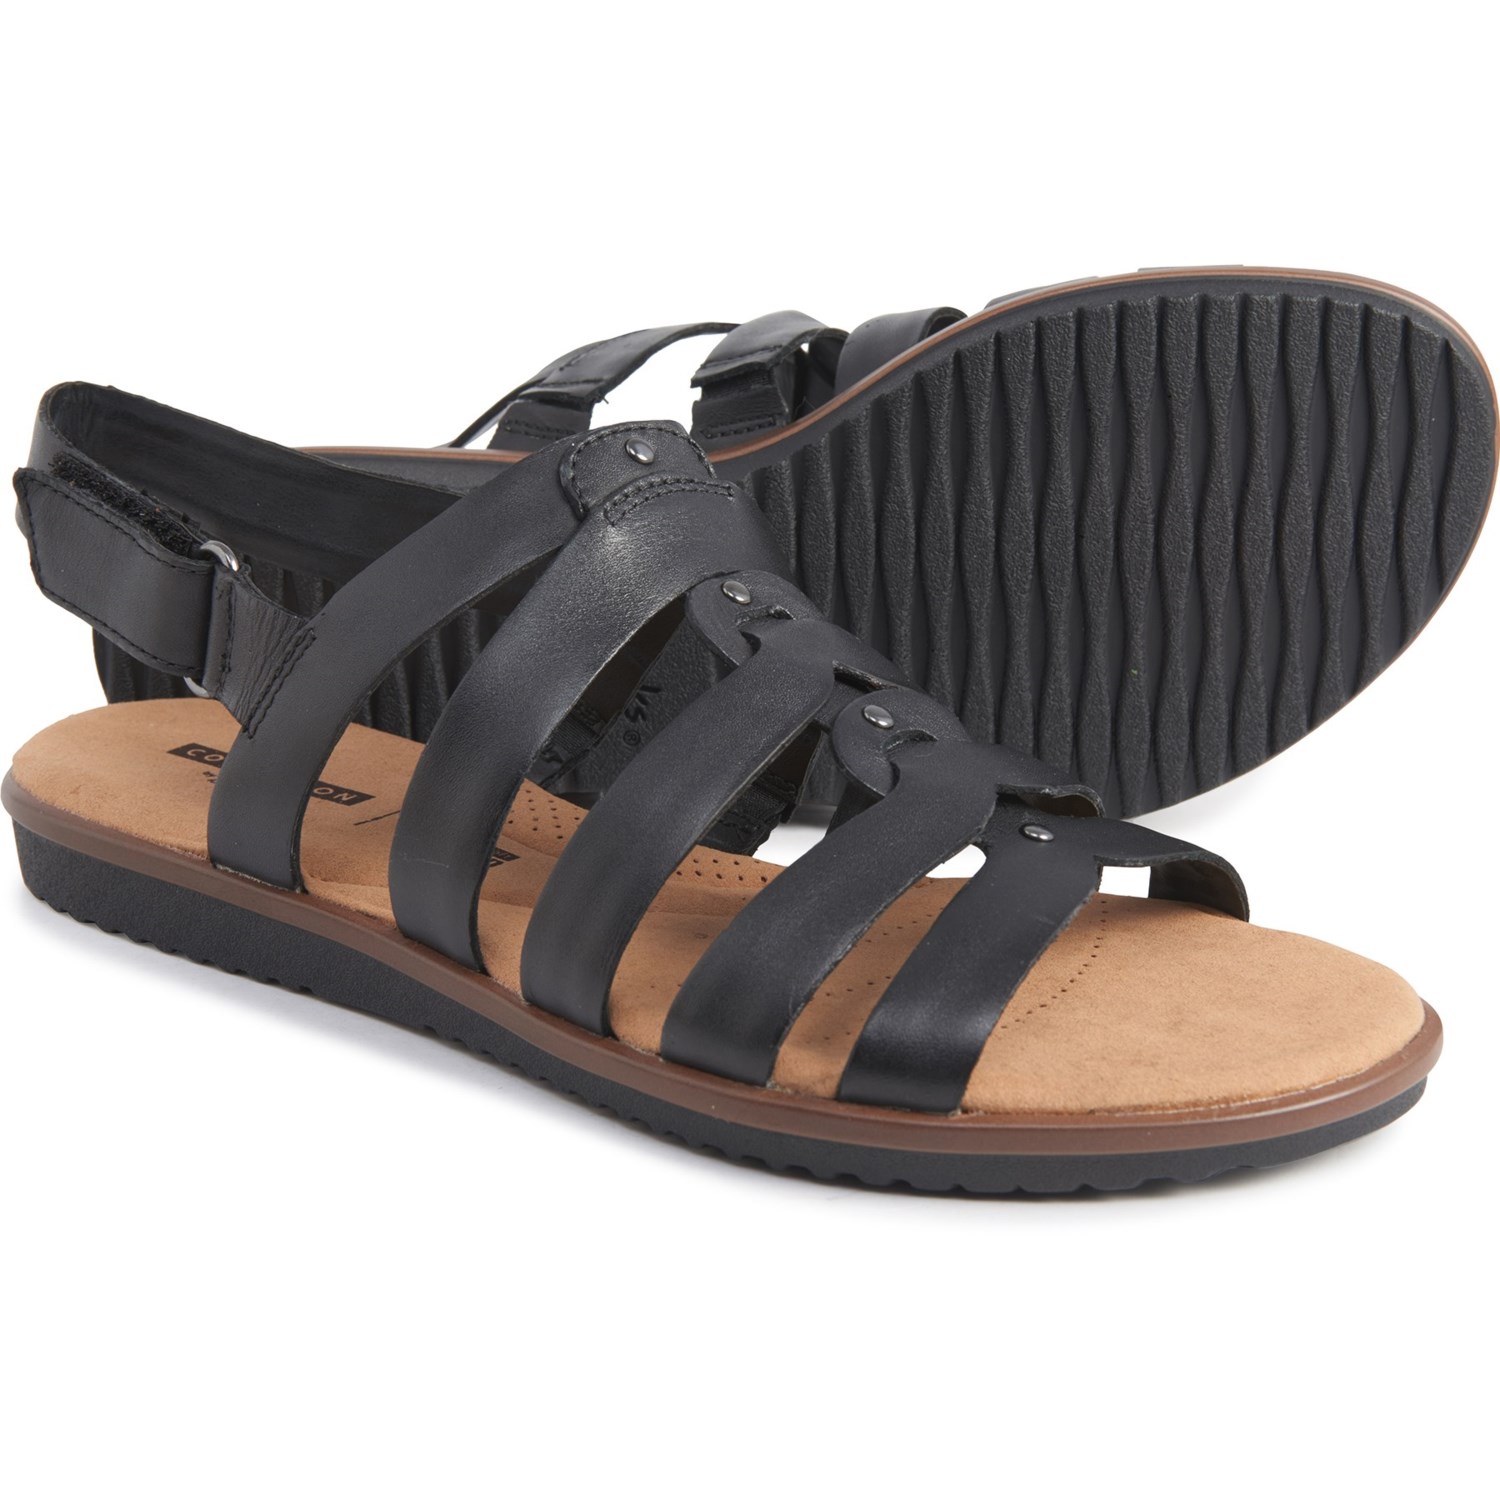 clarks black sandals